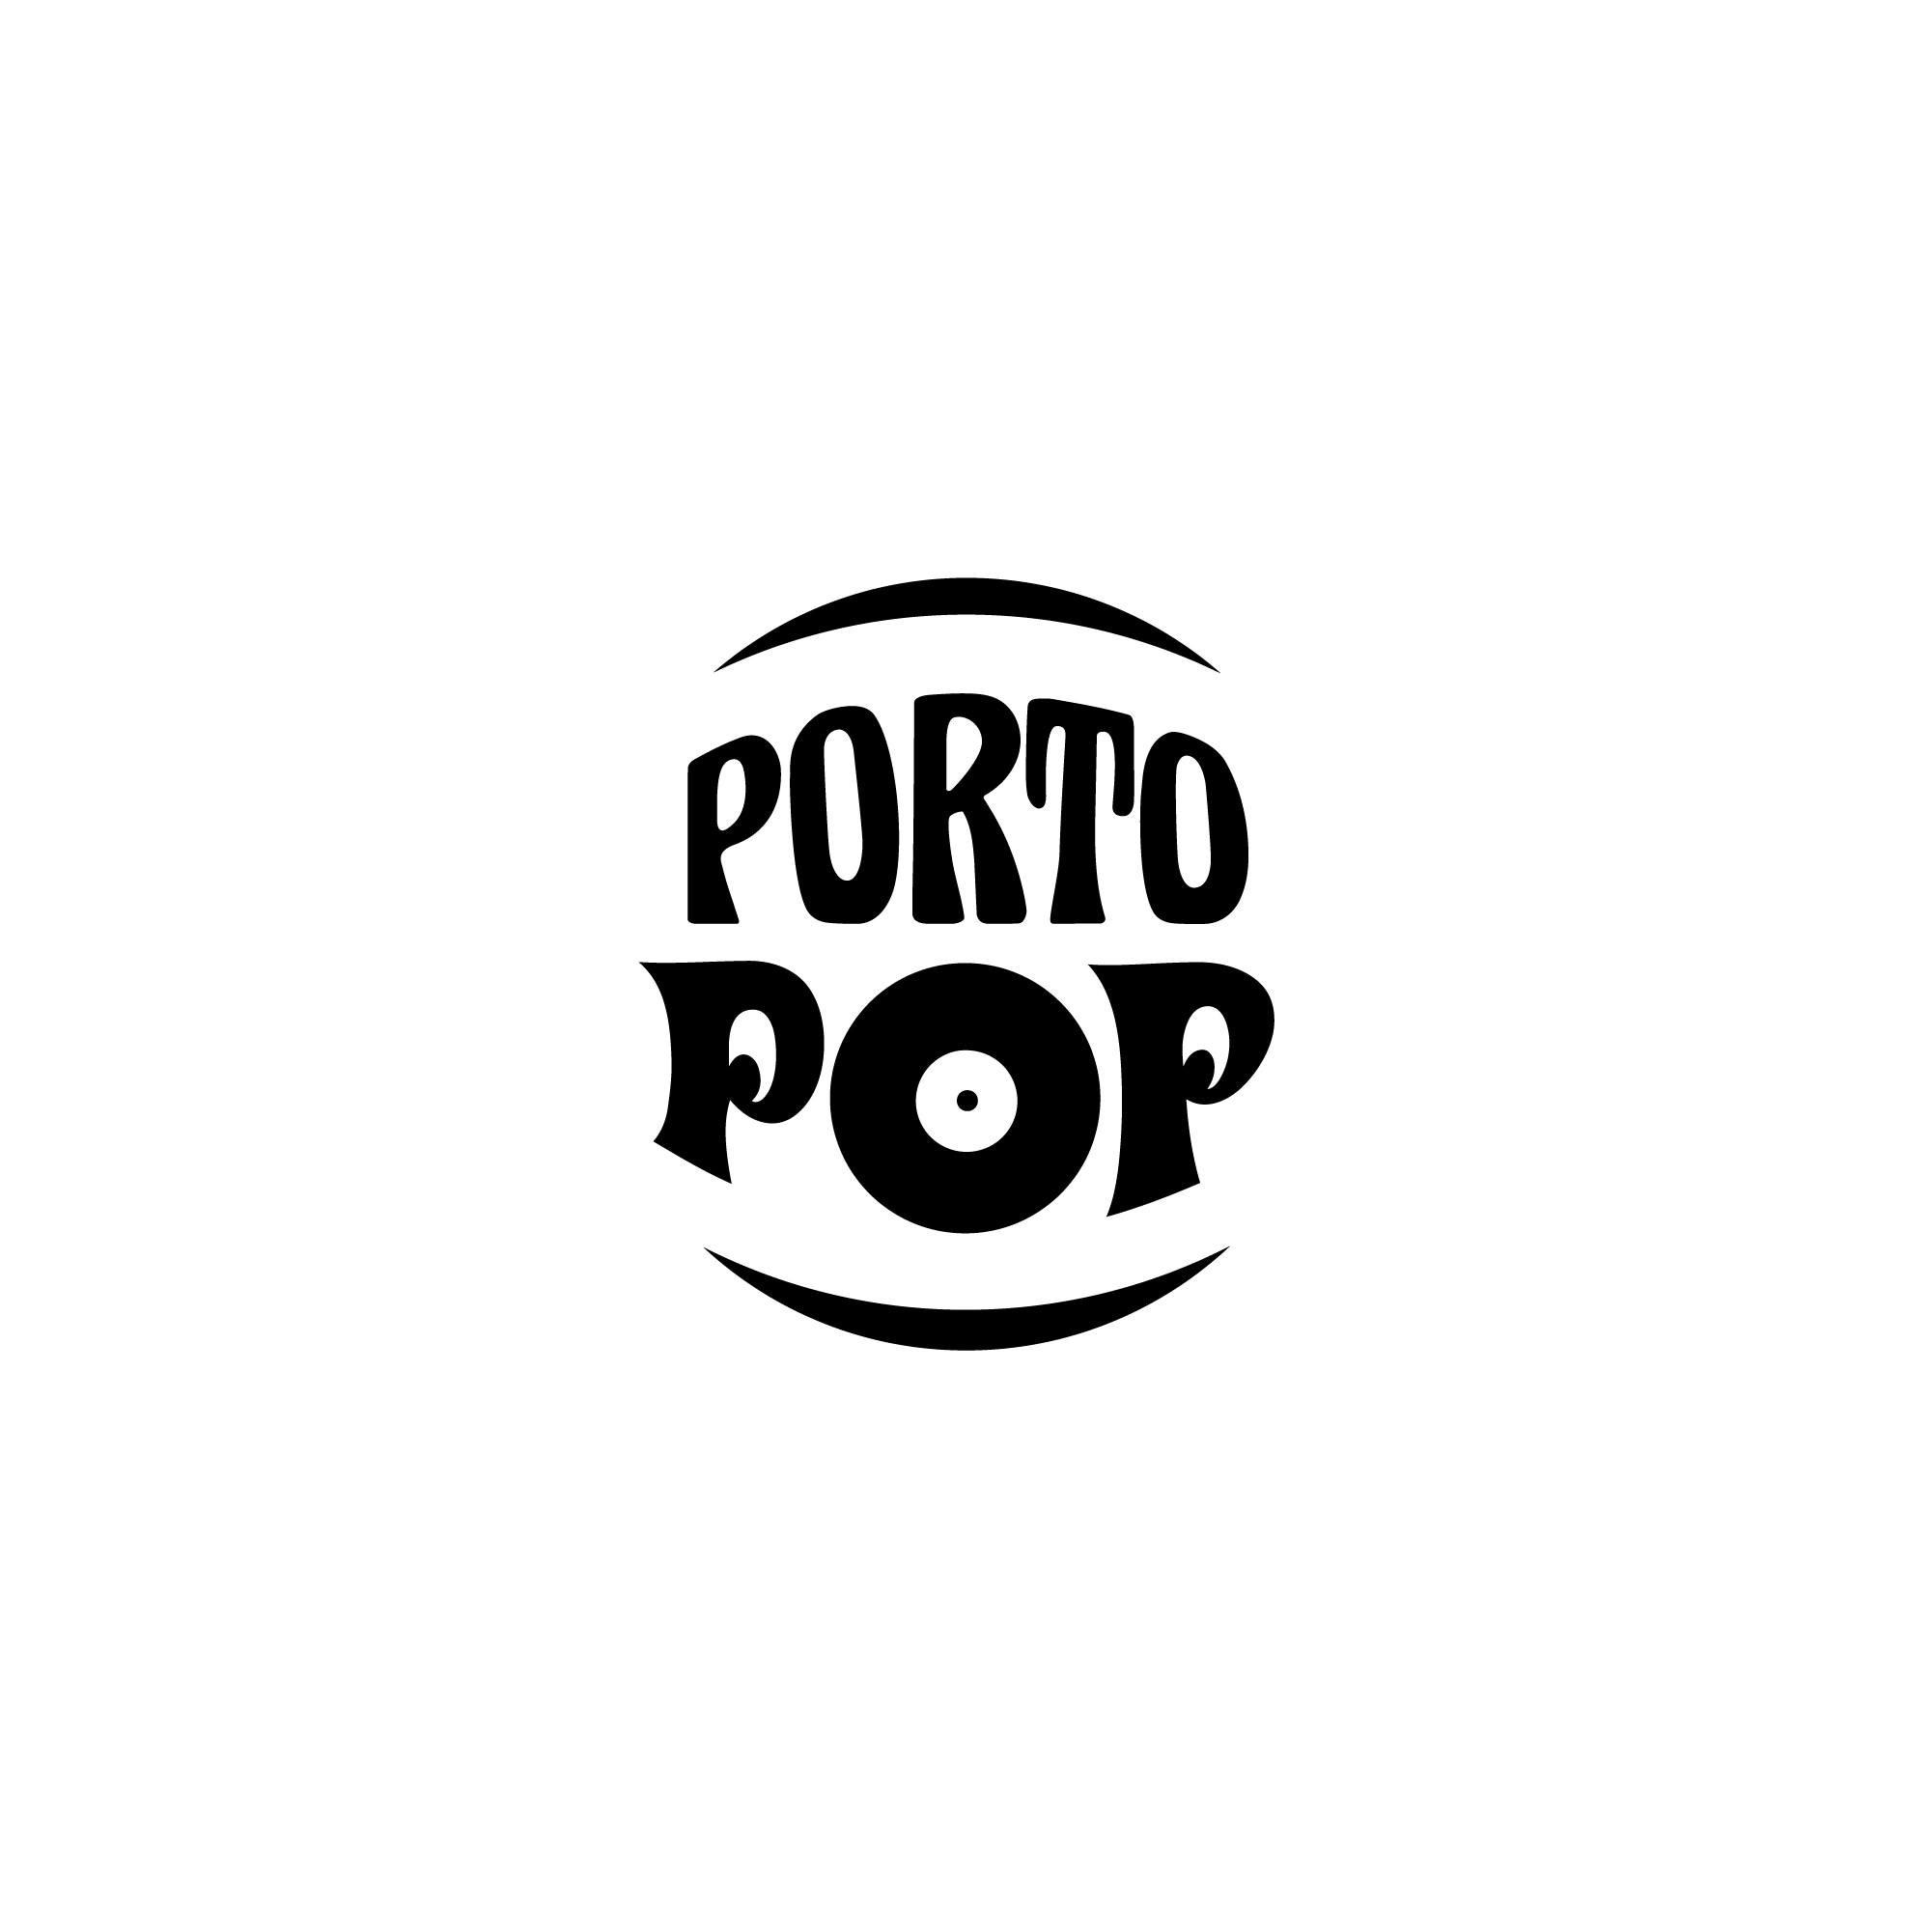 Funky and vintage logo design, based on rock cds, pop art, logo design for Porto pop in black and white